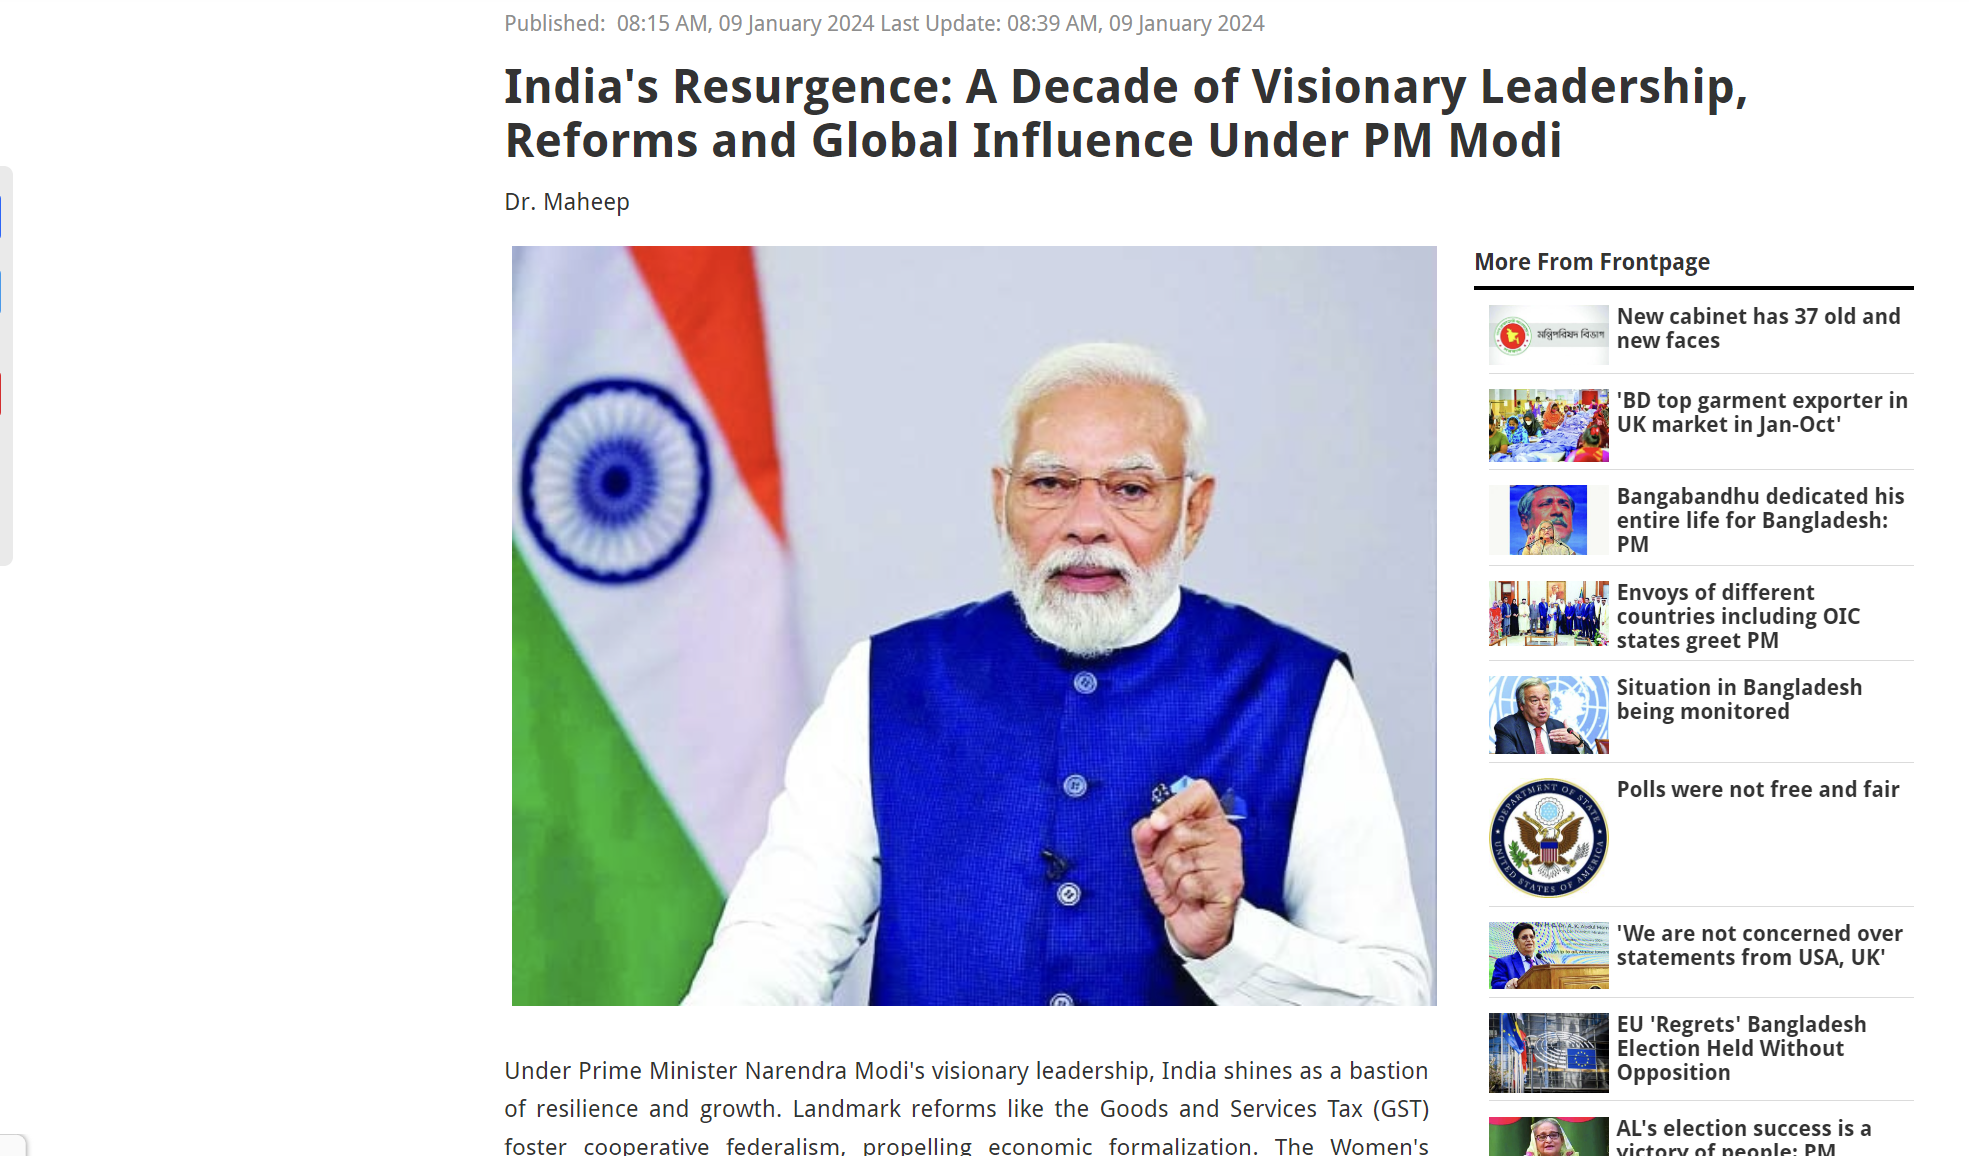 The Asian Age:  Η αναγέννηση της Ινδίας: Μια δεκαετία οραματικής ηγεσίας, μεταρρυθμίσεων και παγκόσμιας επιρροής υπό τον πρωθυπουργό Μόντι